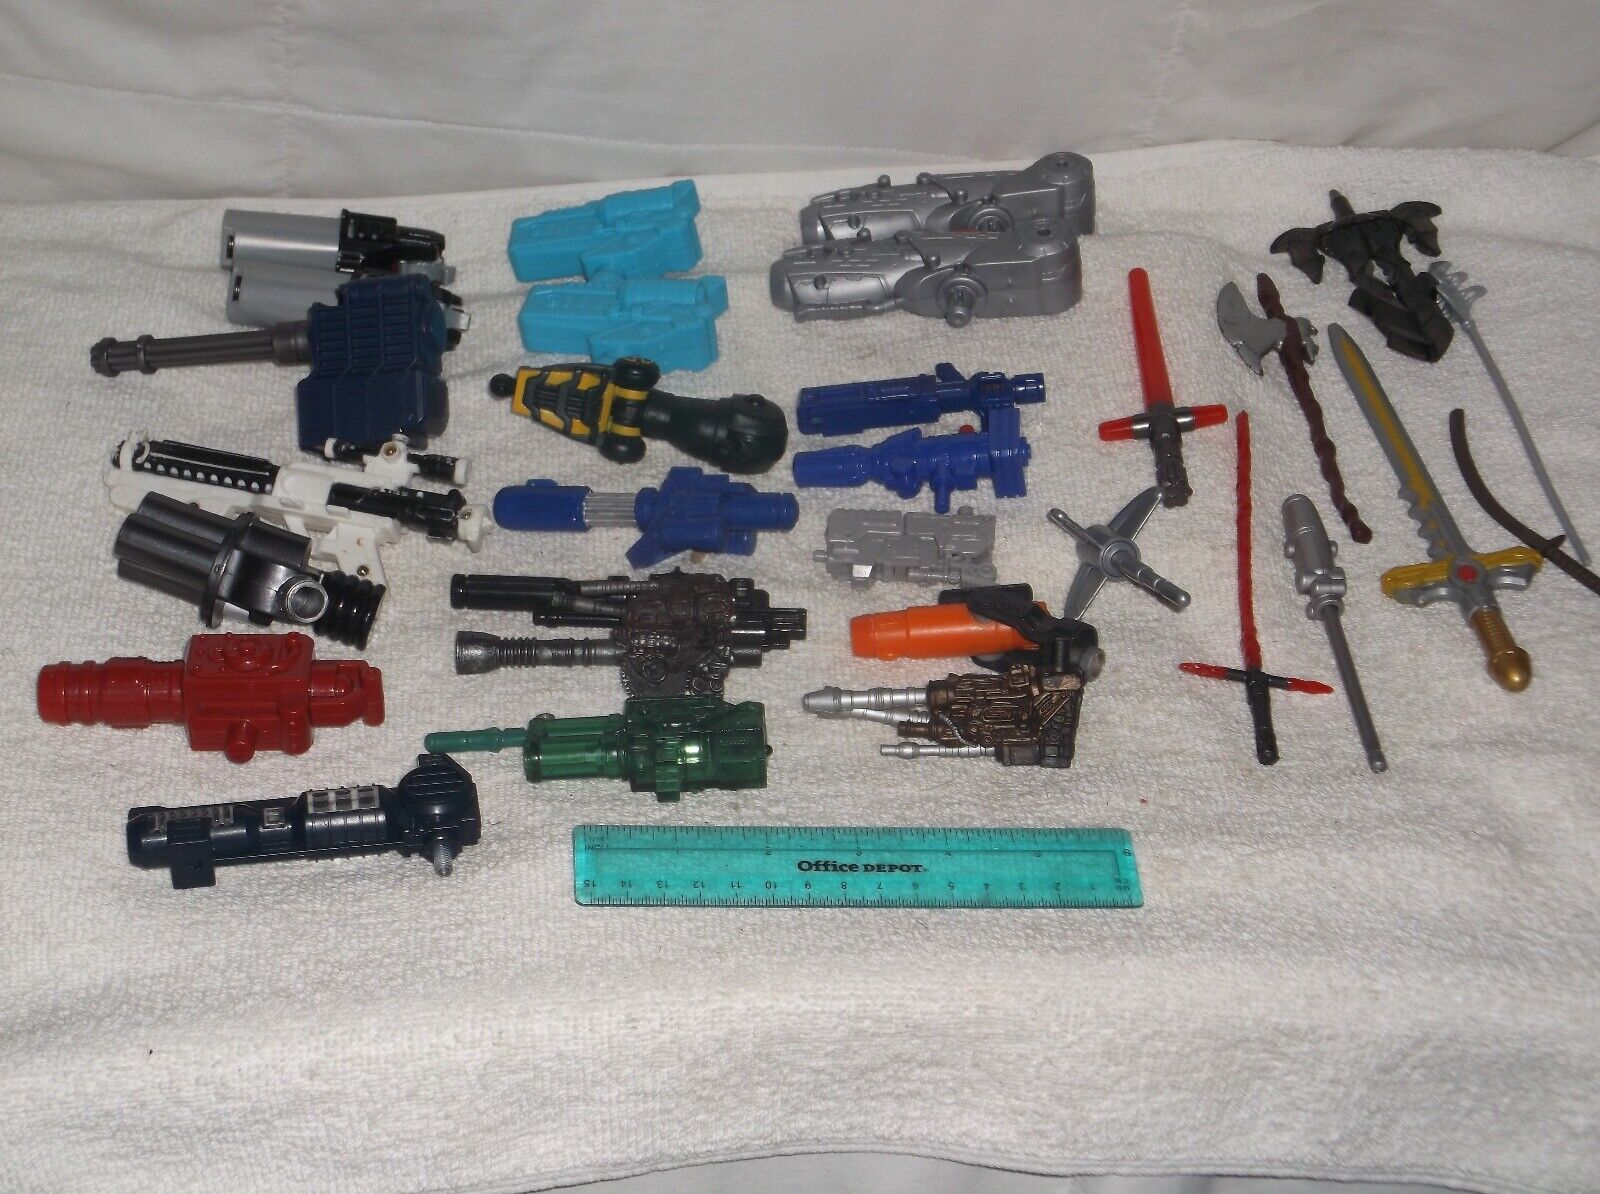  Transformers bandai power rangers  weapons-lot of 30-med-2000-fair